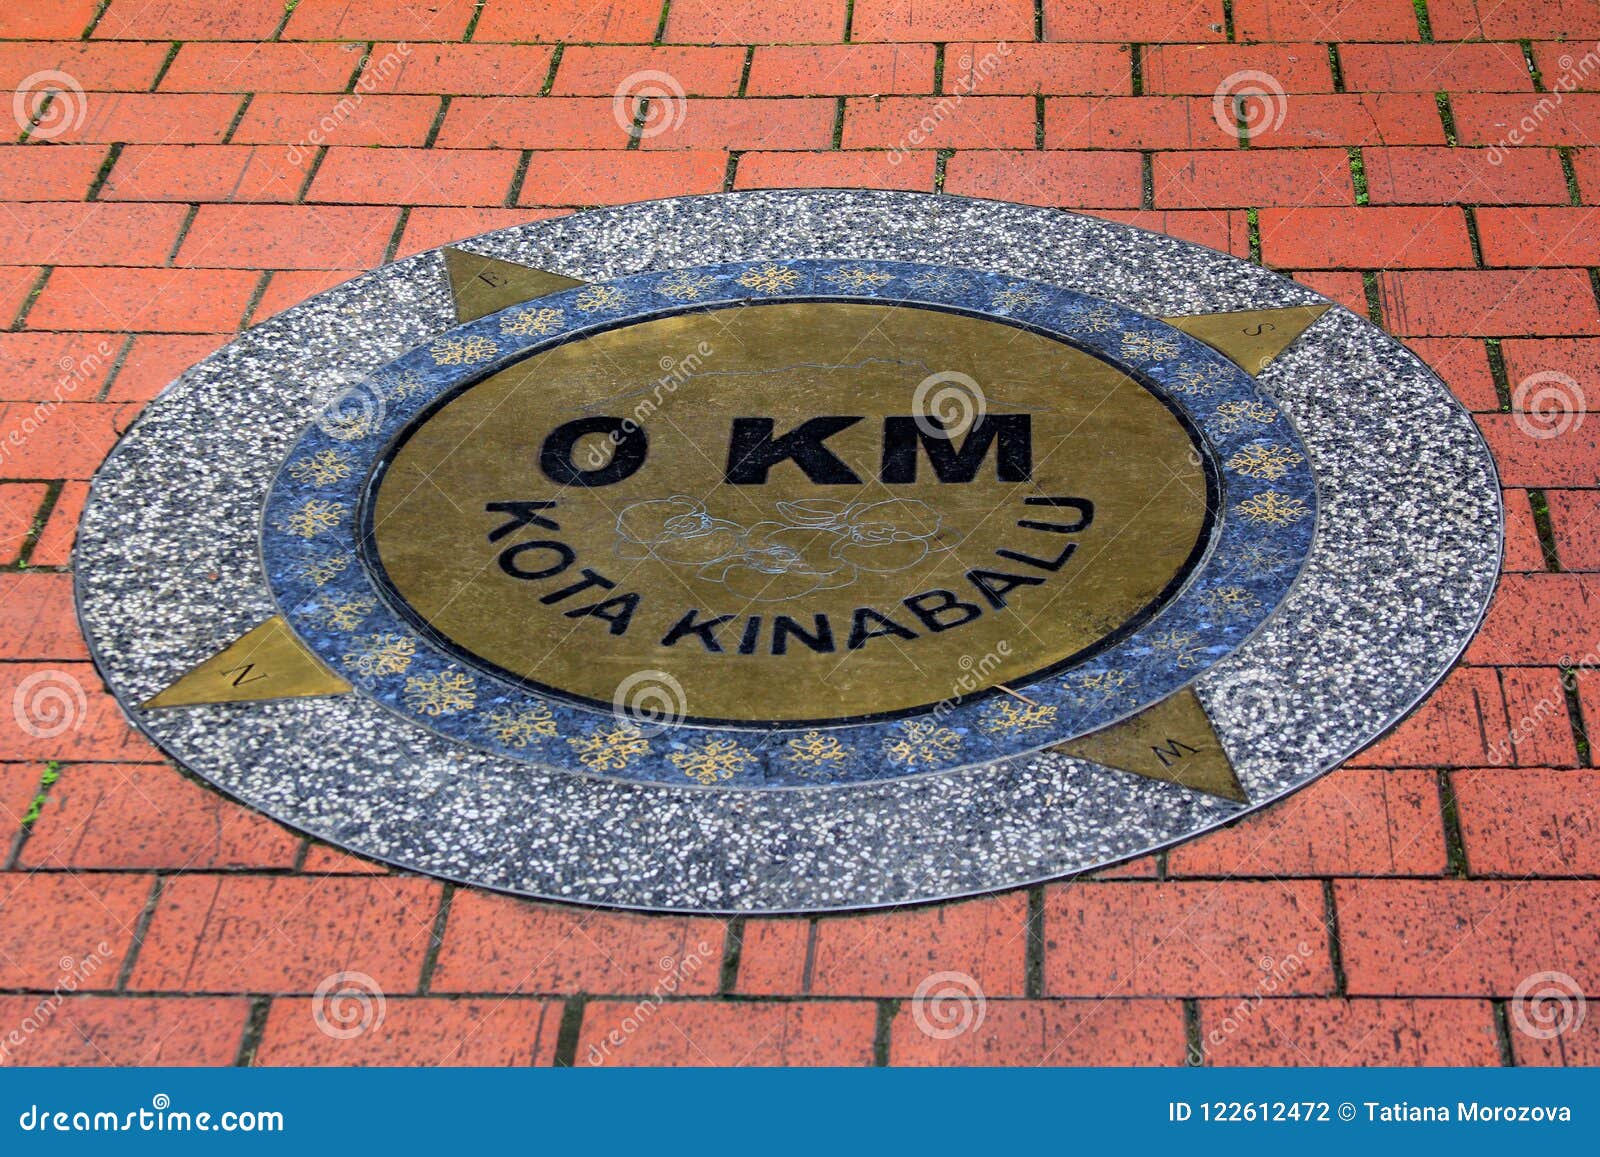 memorial plaque with zero kilometers